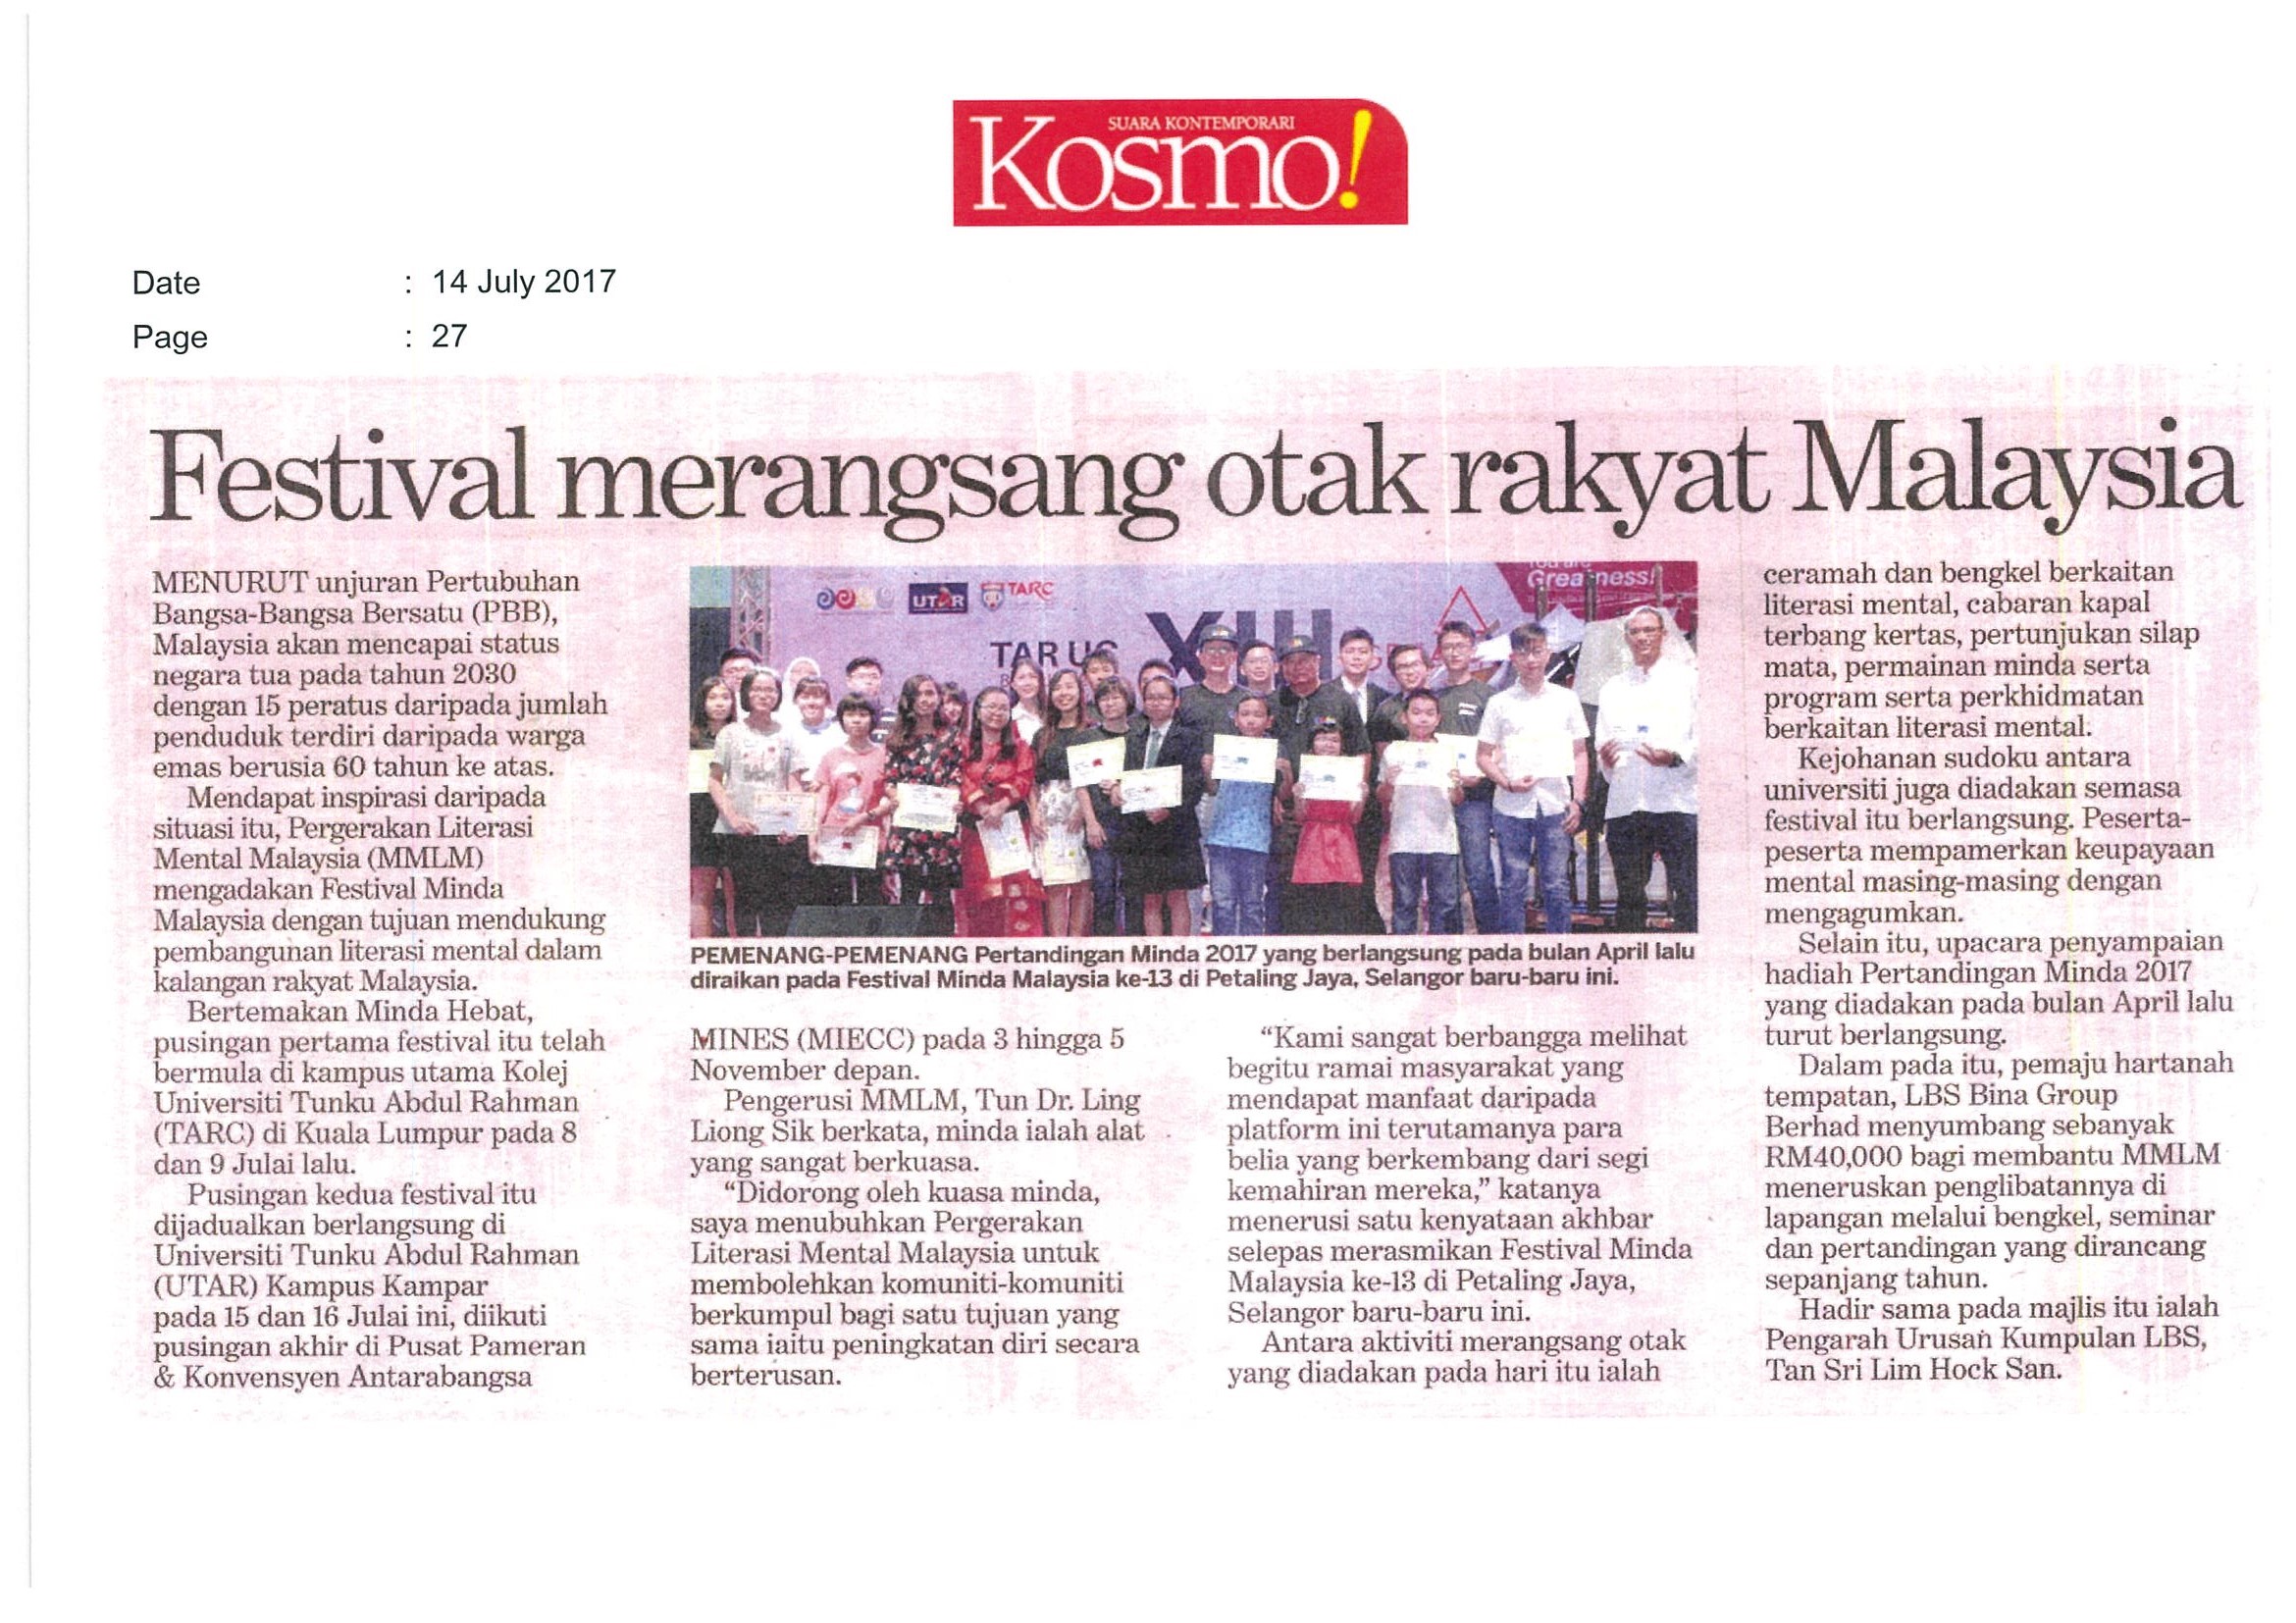 2017.07.14 Kosmo – Festival merangsang otak rakyat Malaysia